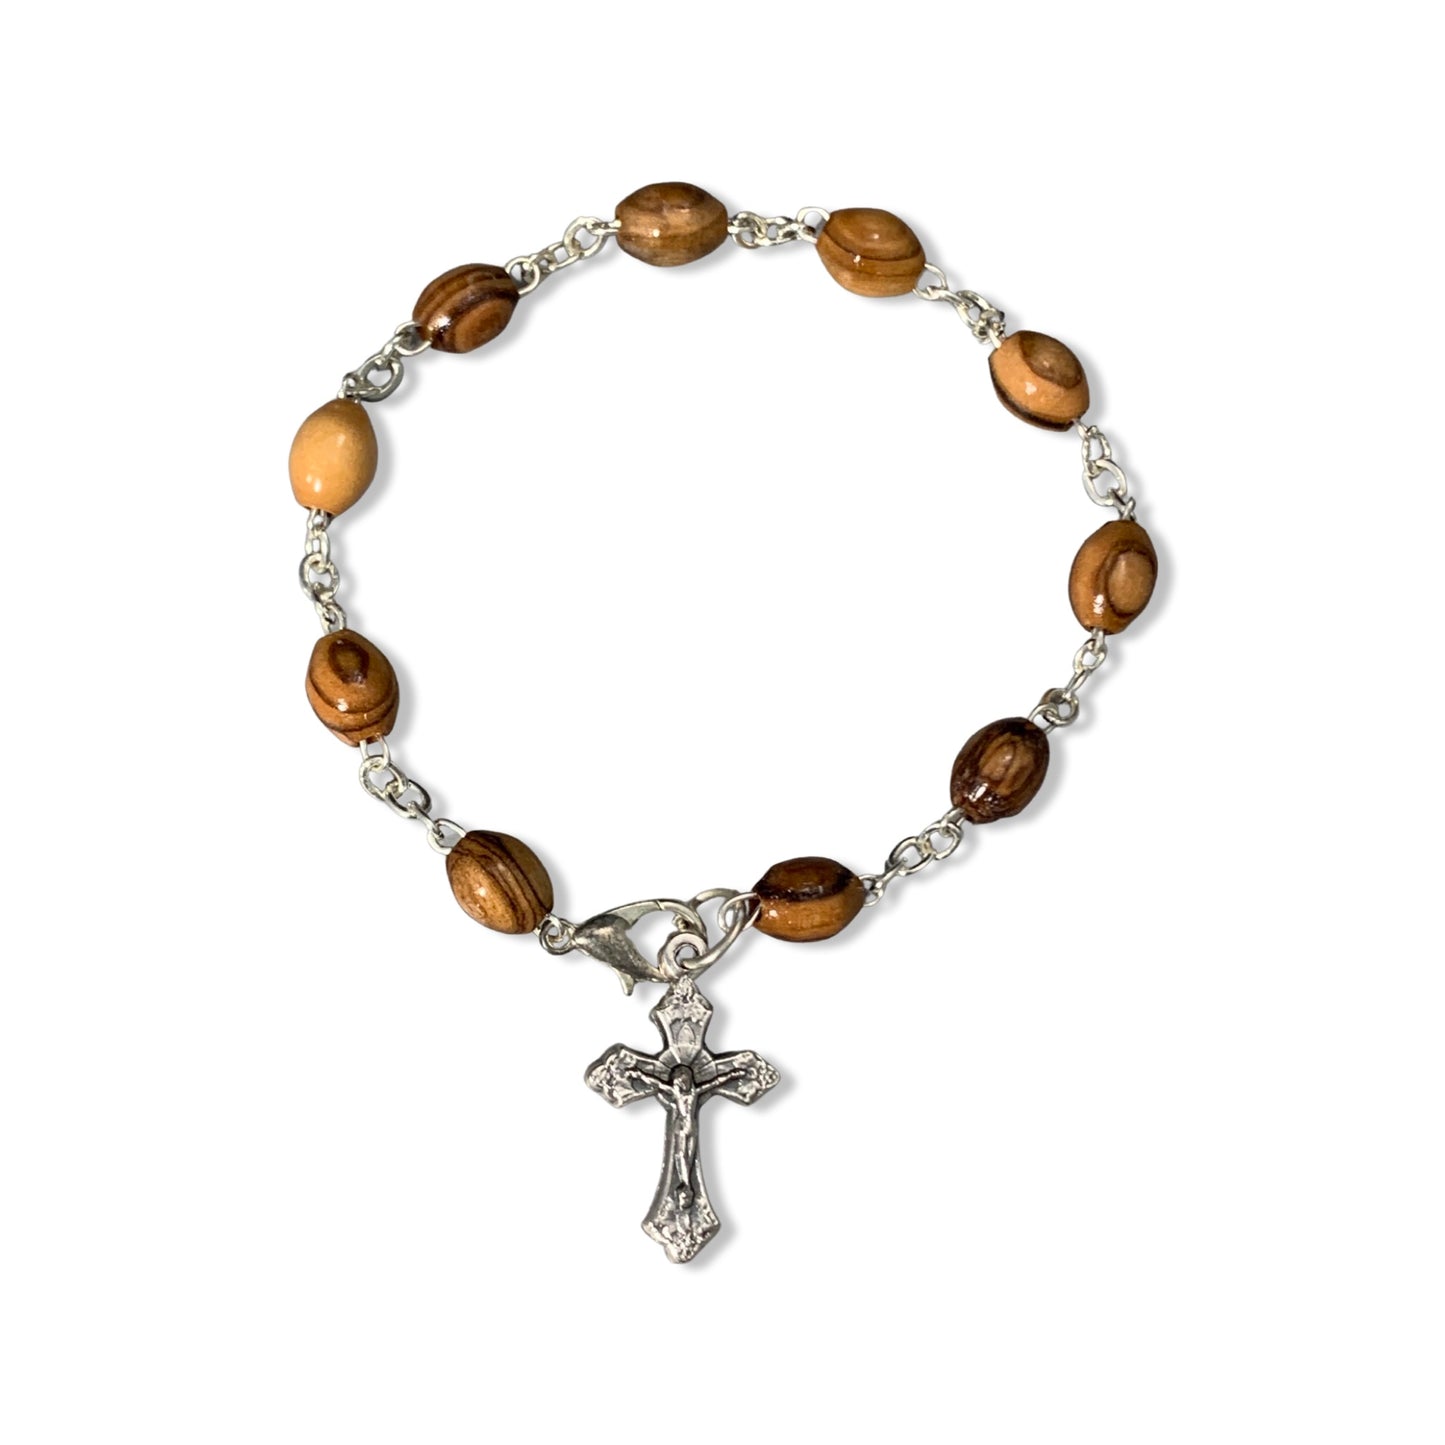 Amazon.com: 1 X Wood Rosary Bracelet with Colorful Religious Icons & Beads  - Shiny Mahogany Wood : Arts, Crafts & Sewing